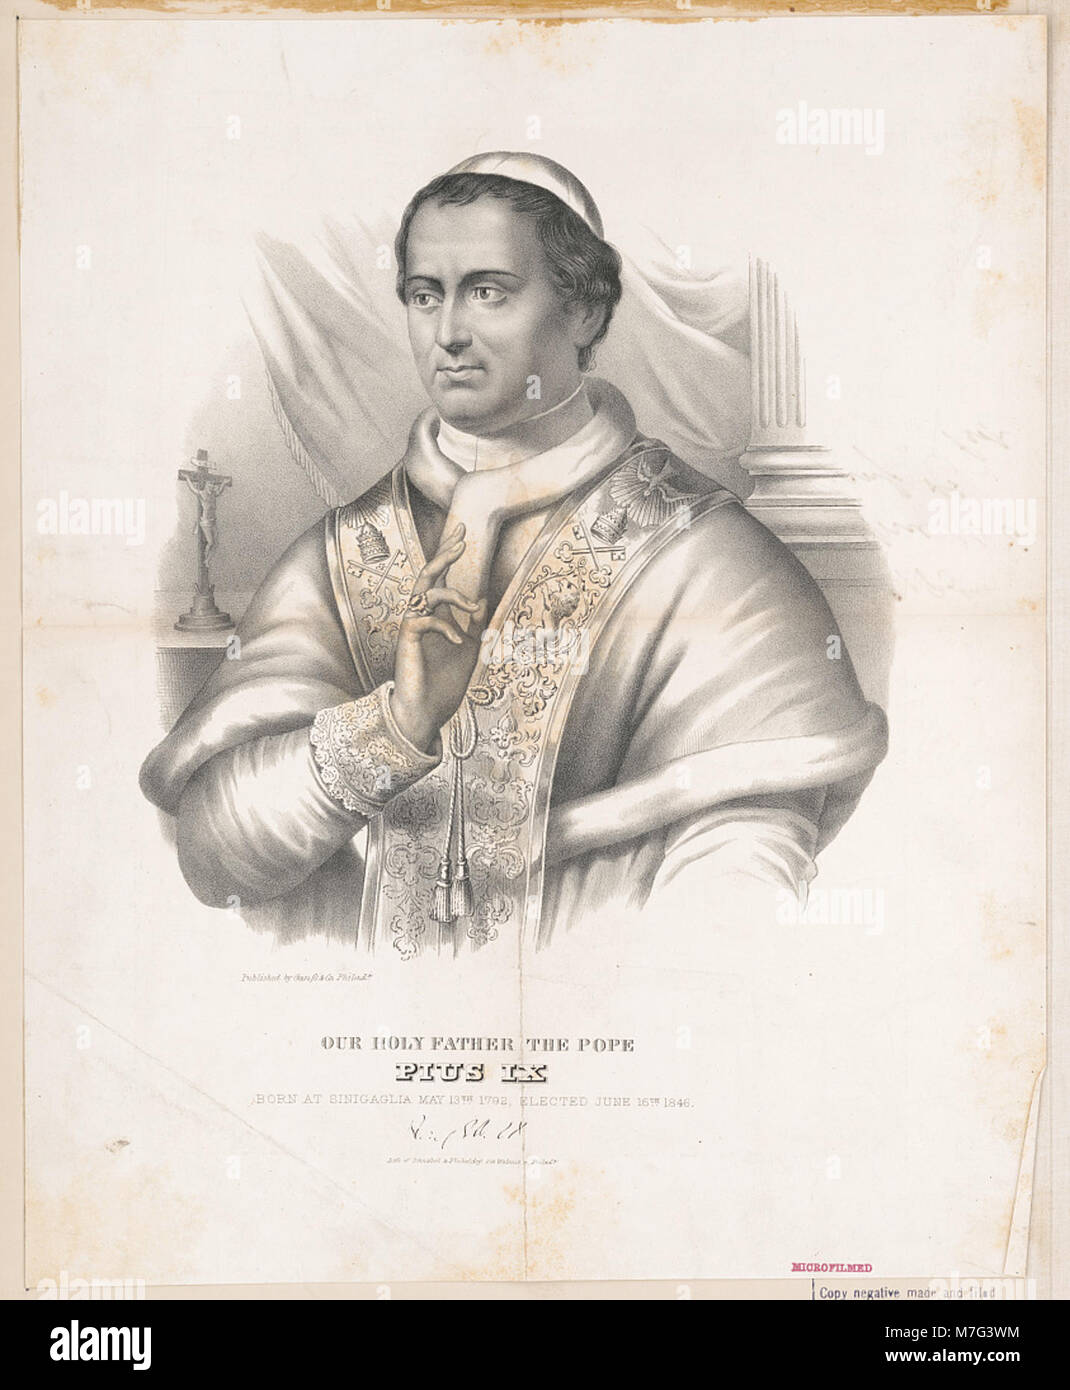 Unser Heiliger Vater, Papst Pius IX. LCCN 2003674320 Stockfoto